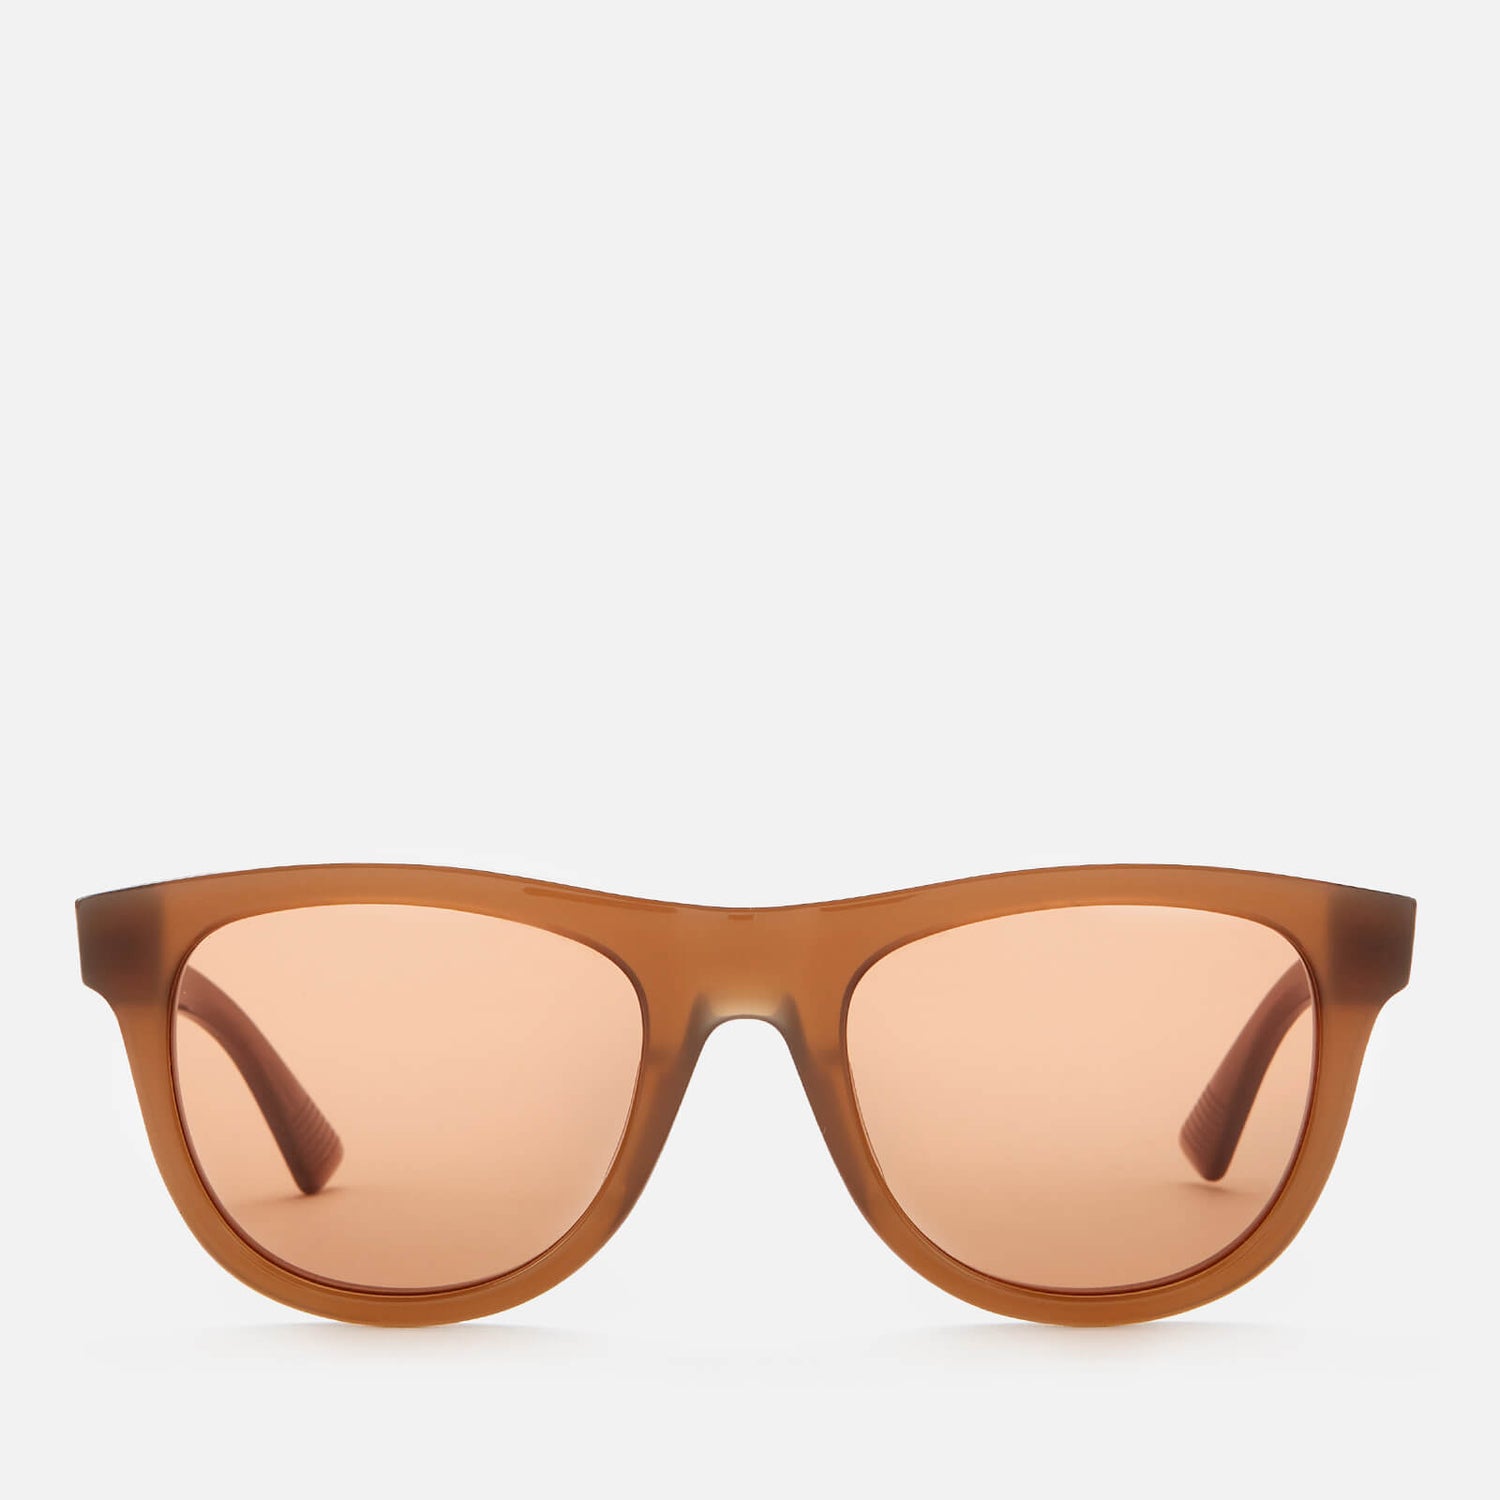 Bottega Veneta Men's Acetate Sunglasses - Brown/Gold